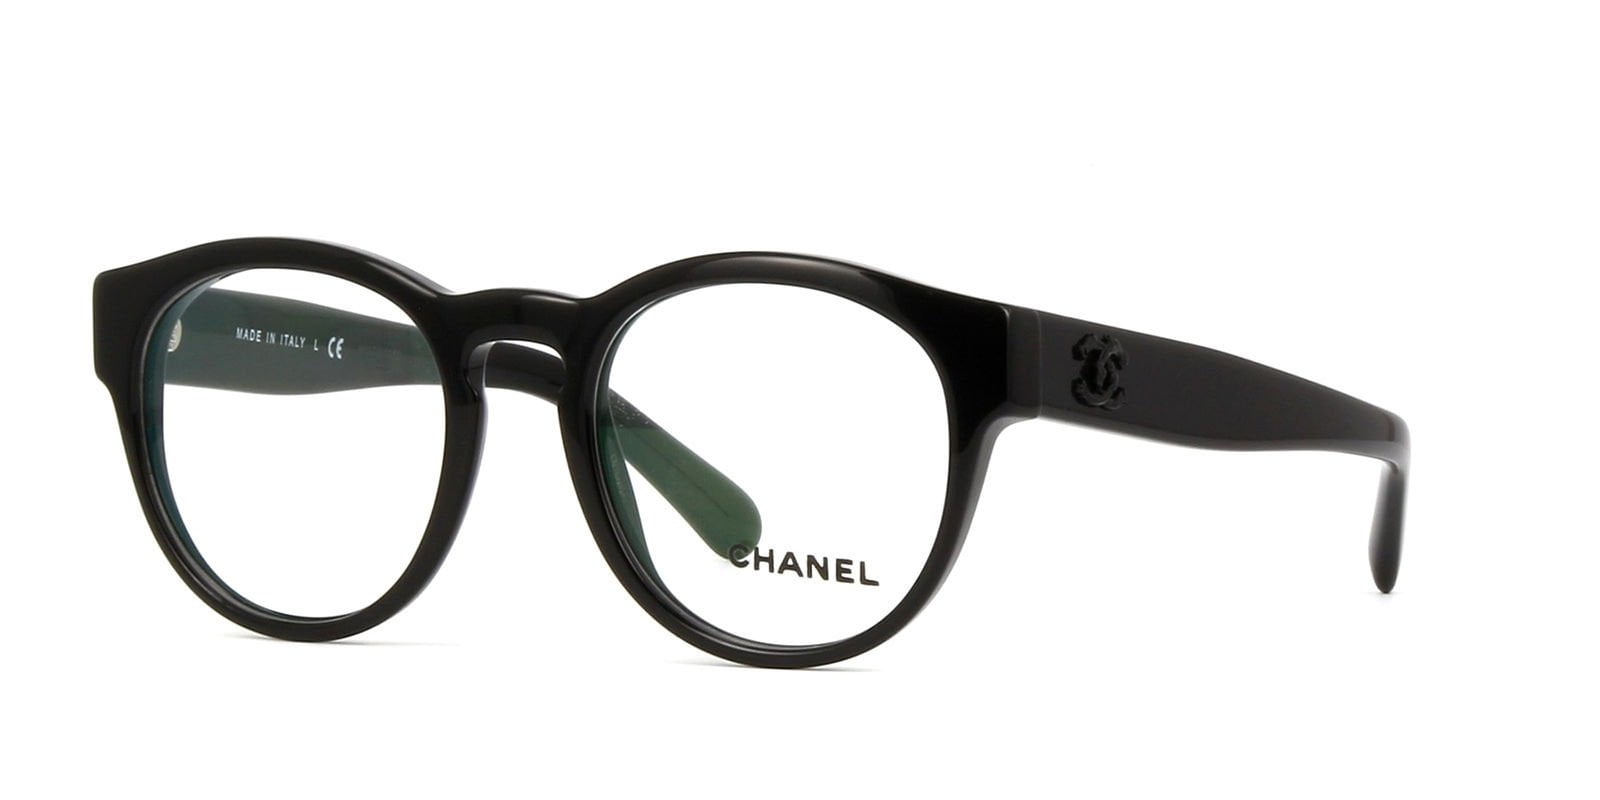 CHANEL, Accessories, Soldchanel 3373 Dark Tortoise Eyeglasses